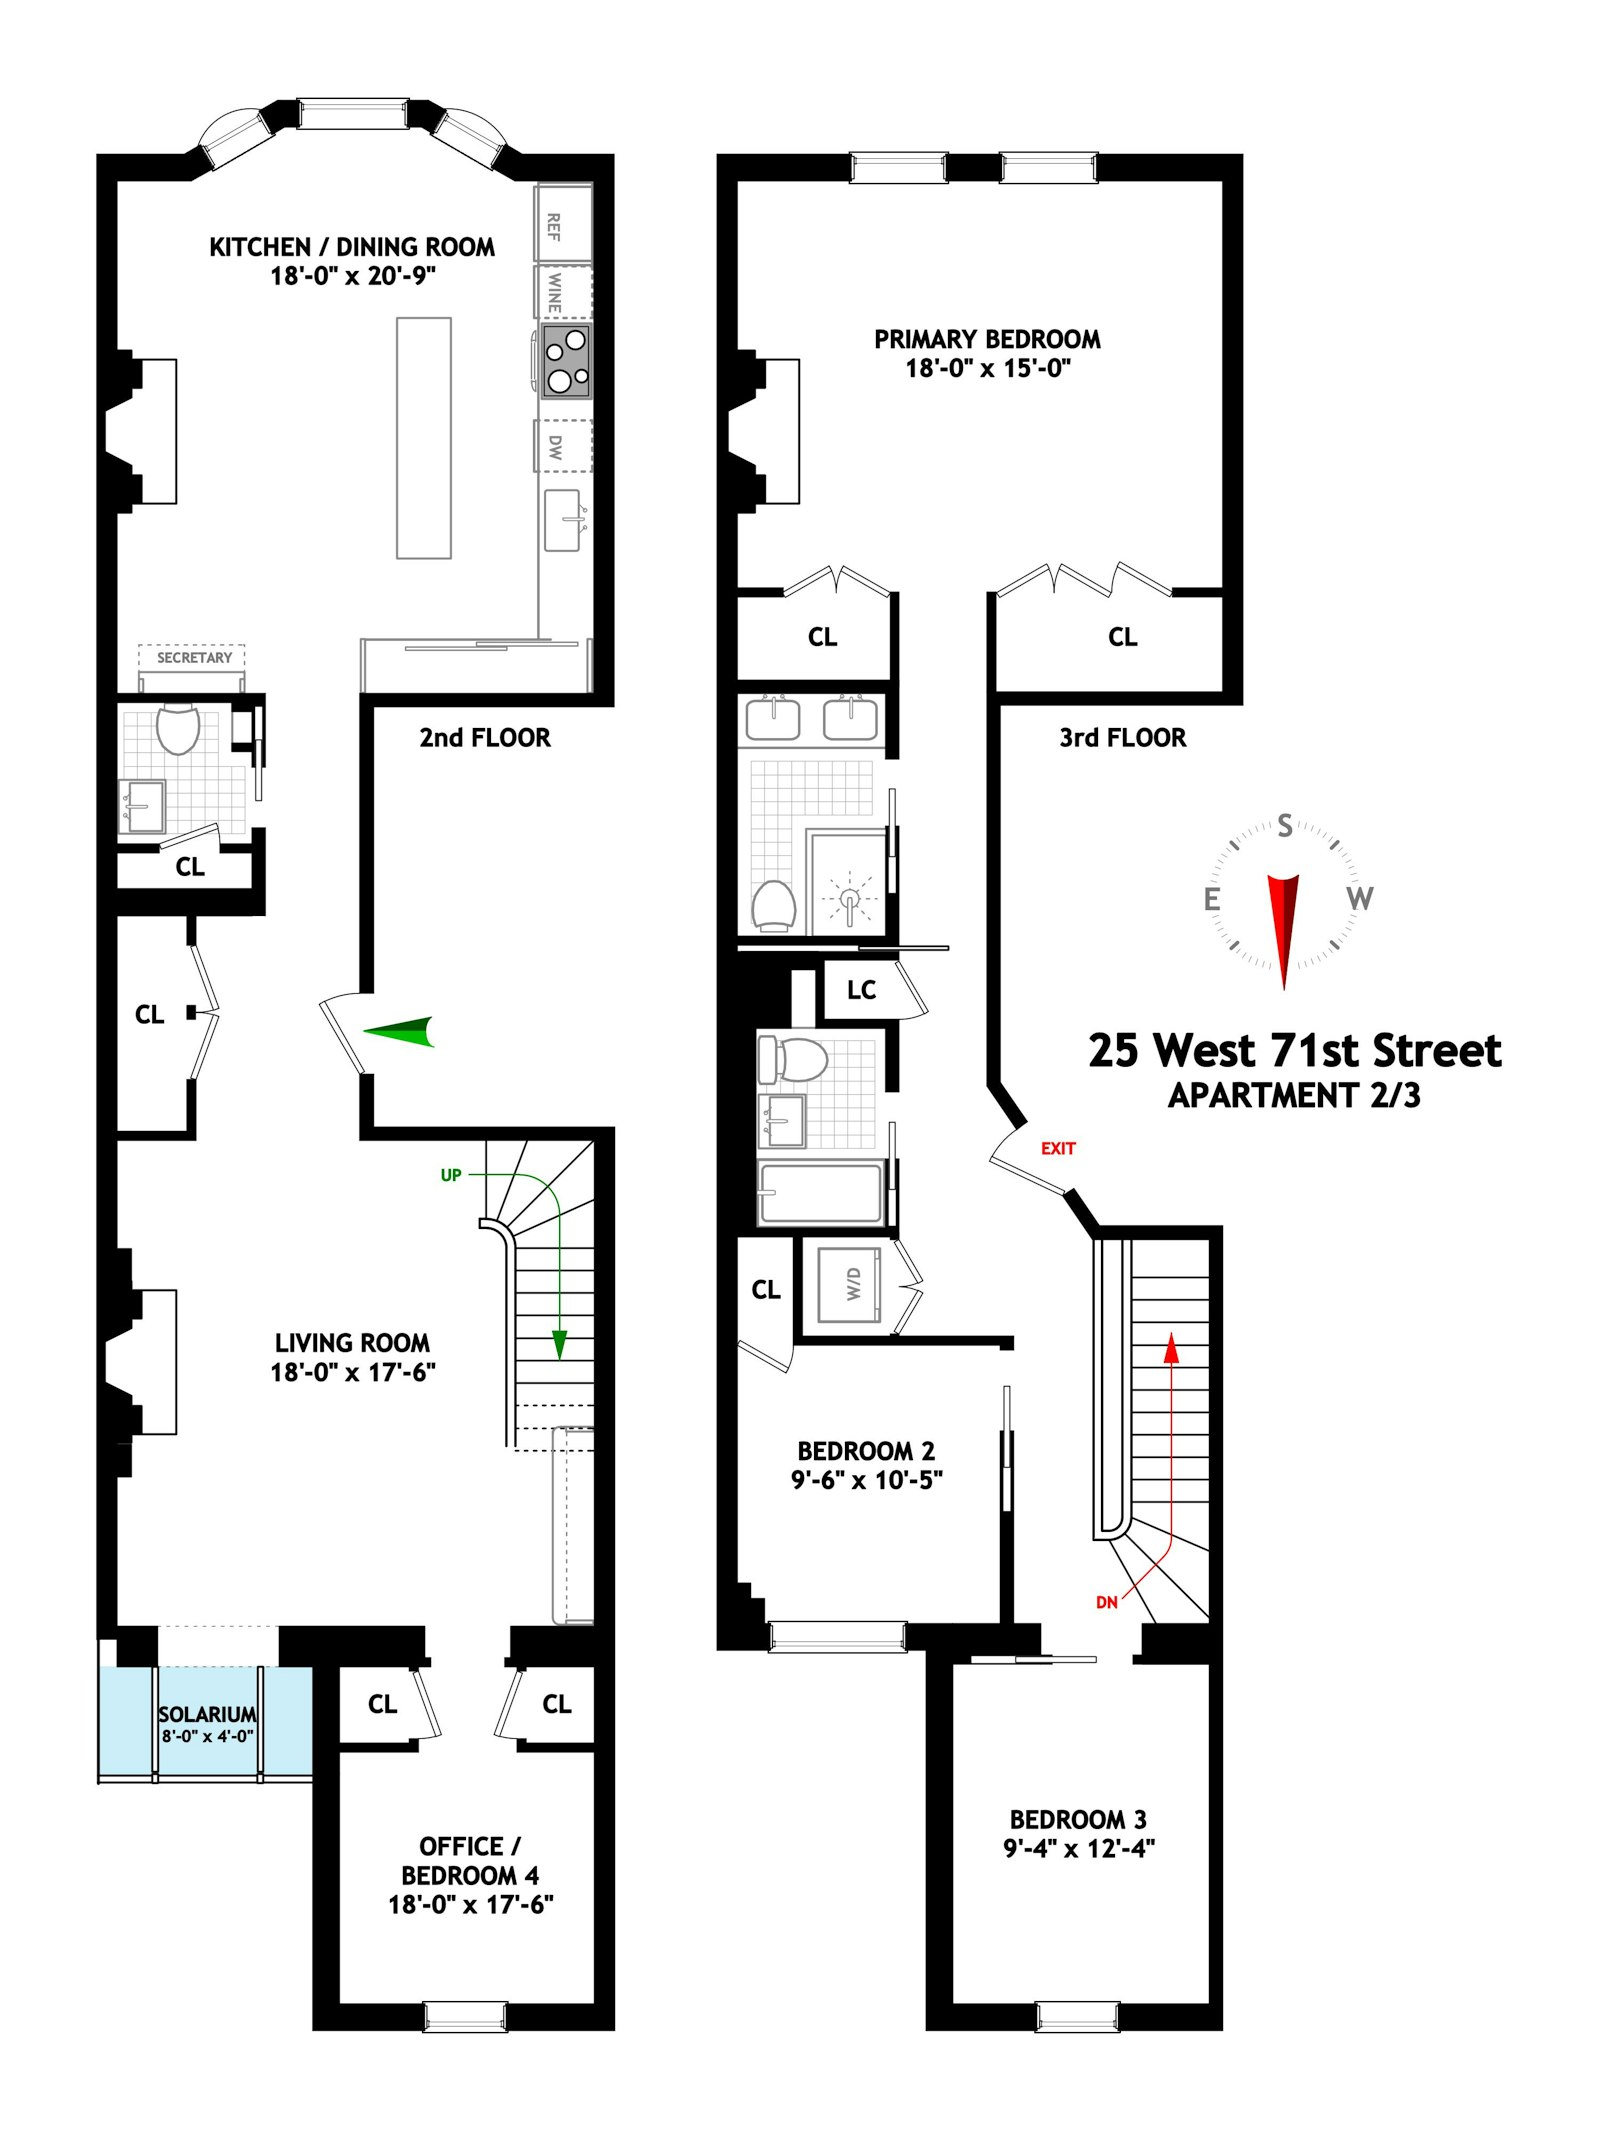 Floorplan for 25 West 71st Street, 2/3